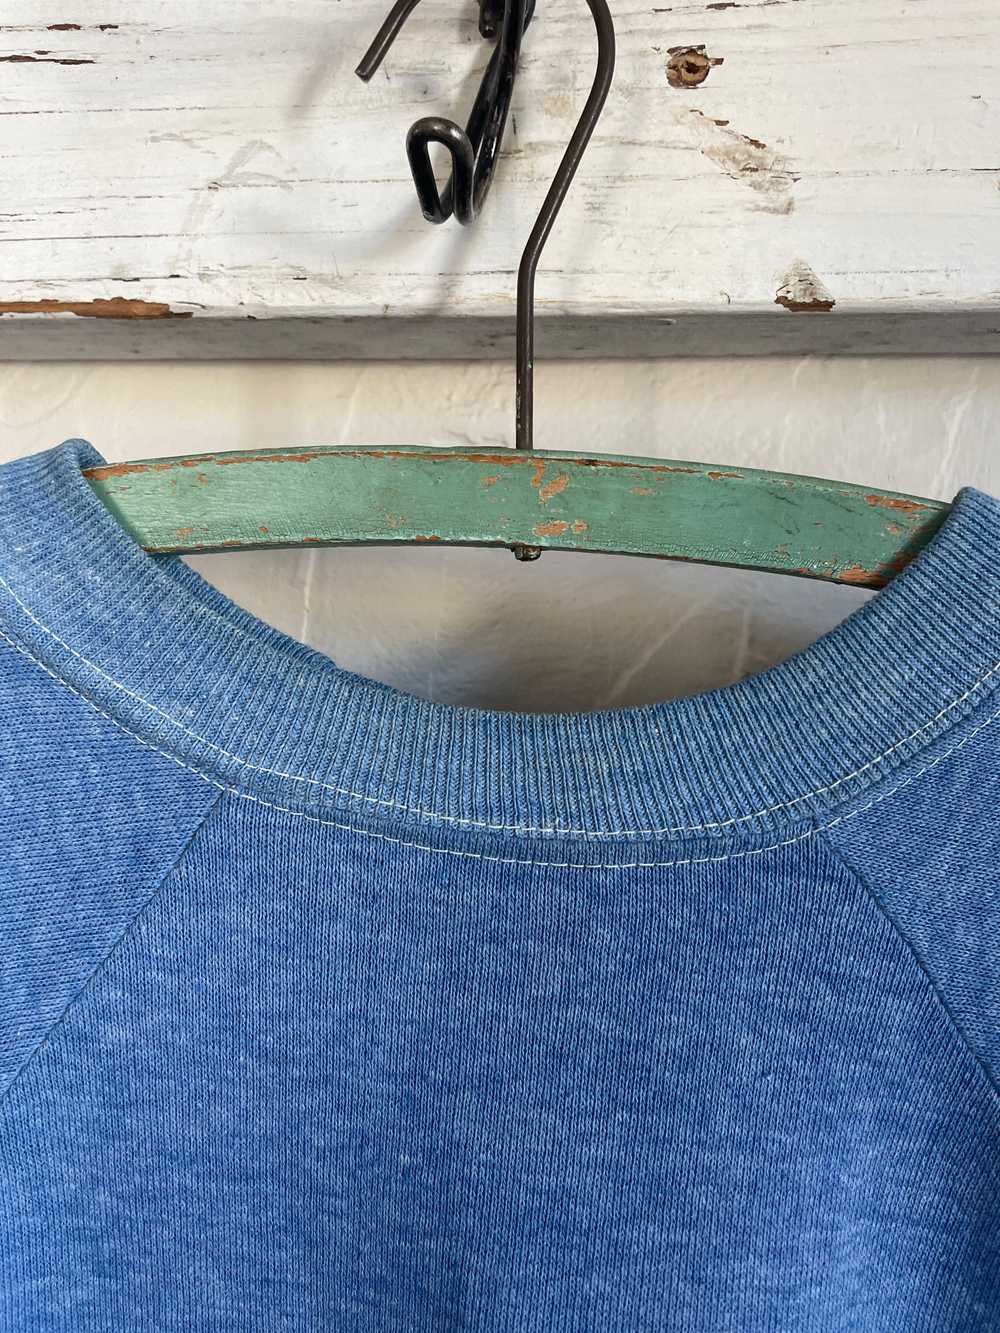 70s/80s Blank Blue Sweatshirt - image 4